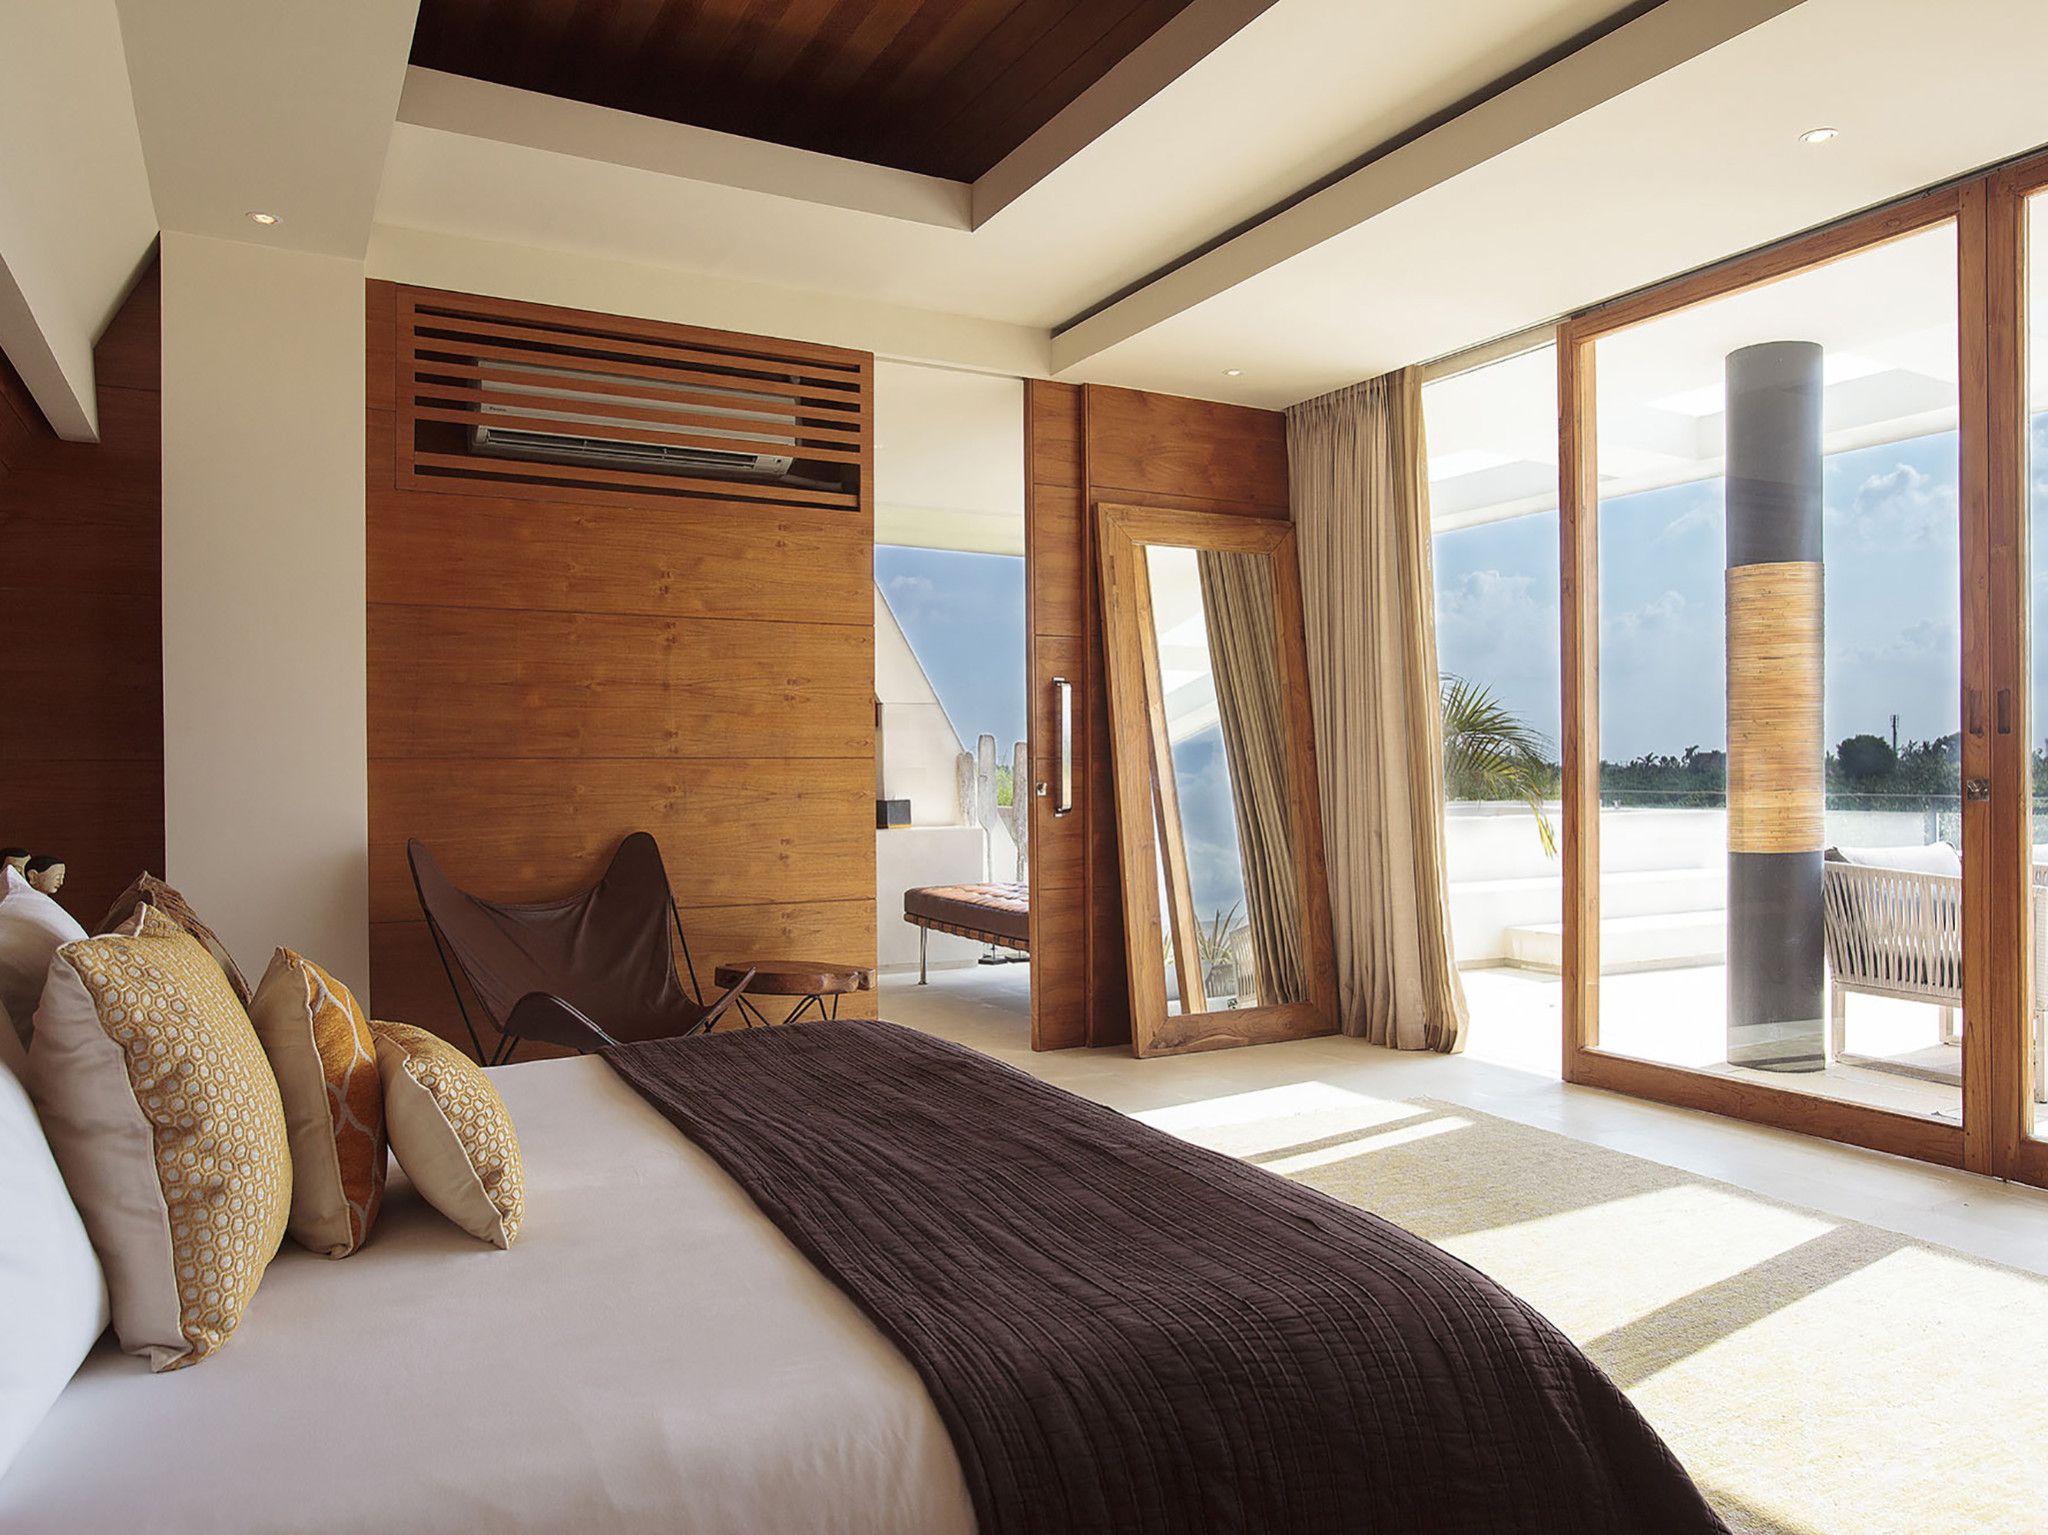 The Iman Villa - Canggu Bali - Master bedroom view to the deck